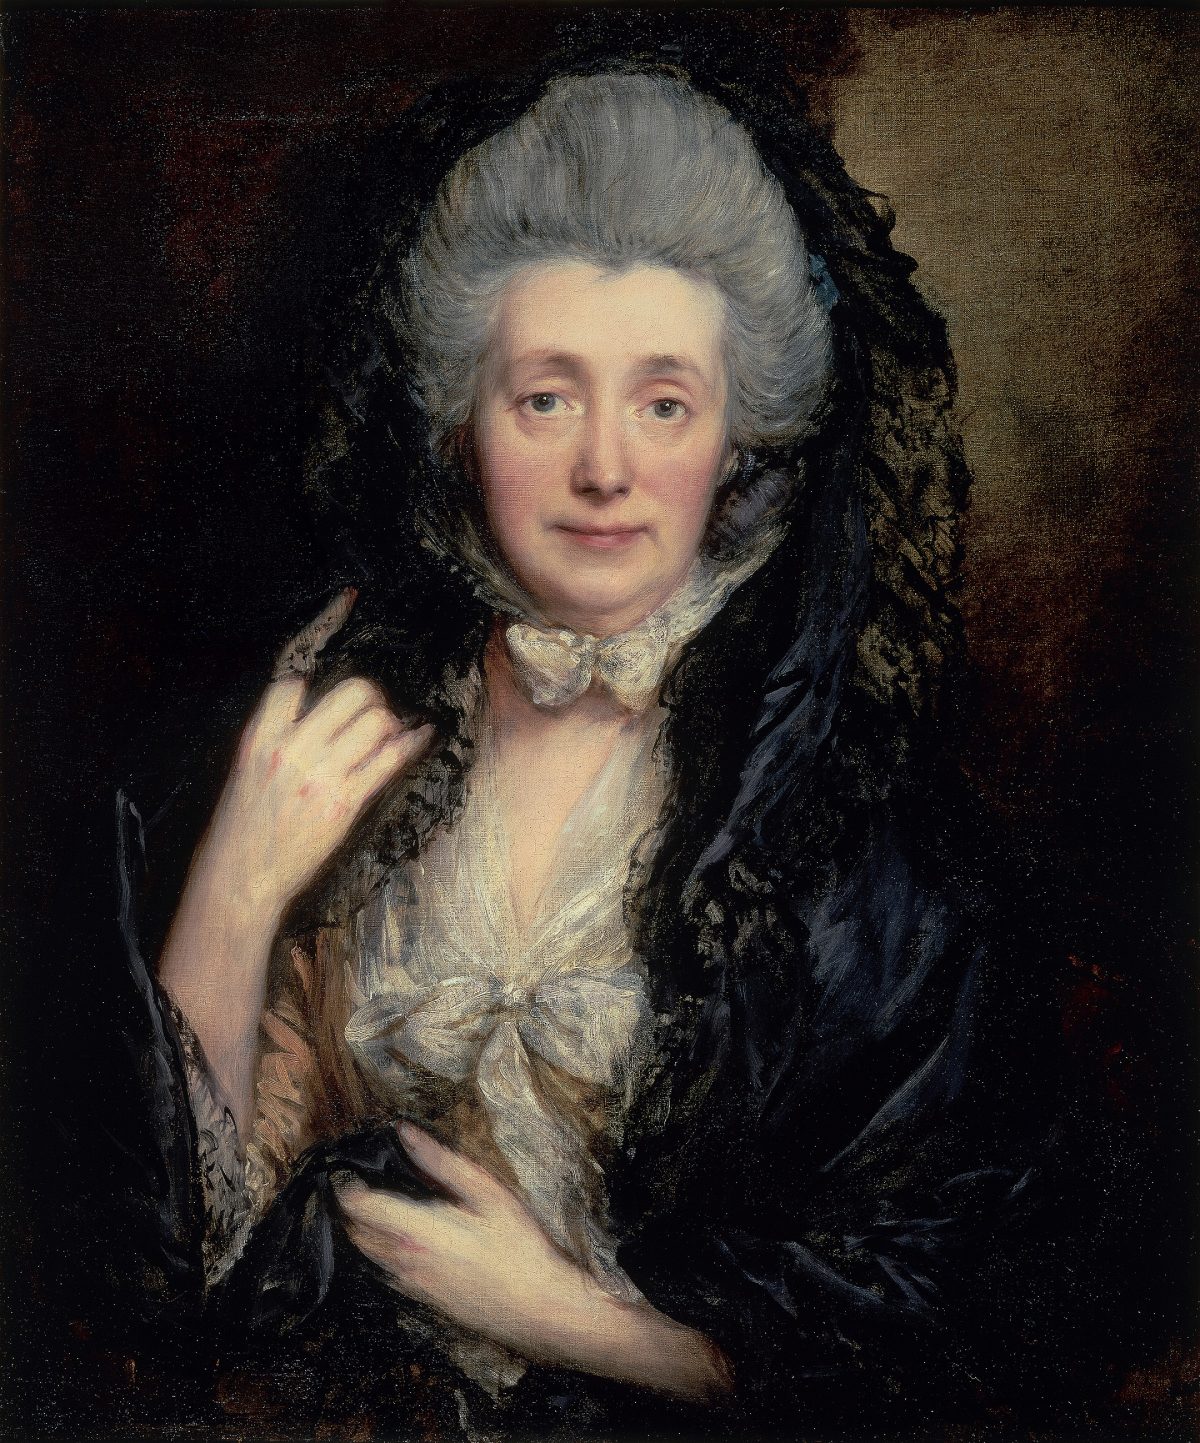 Mature 18th century lady